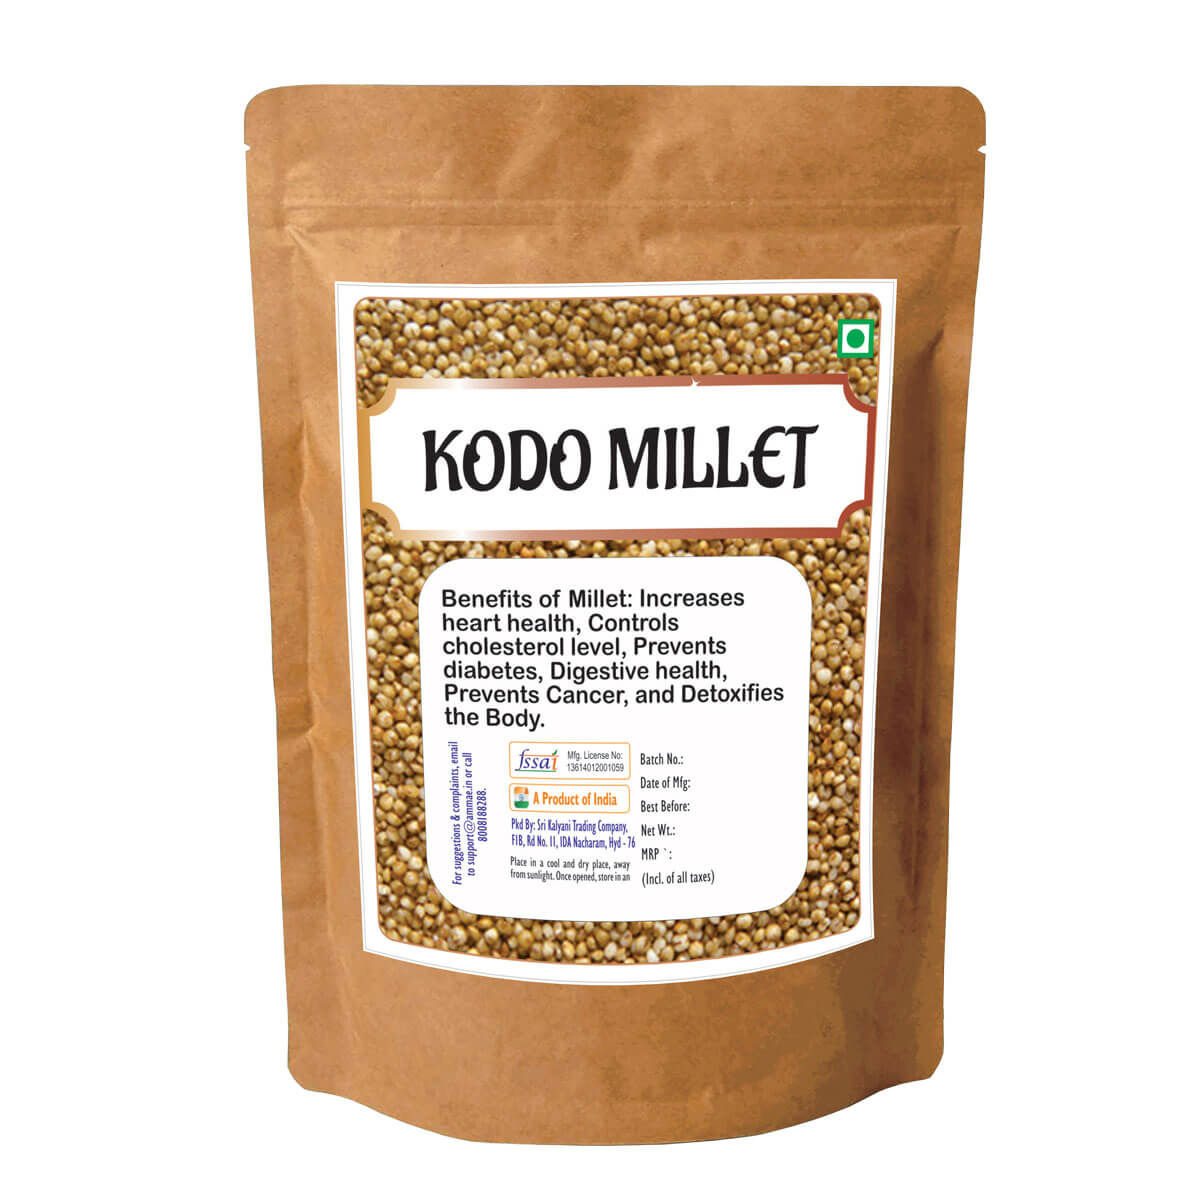 Kodo milet | Millet - Ammae Foods India